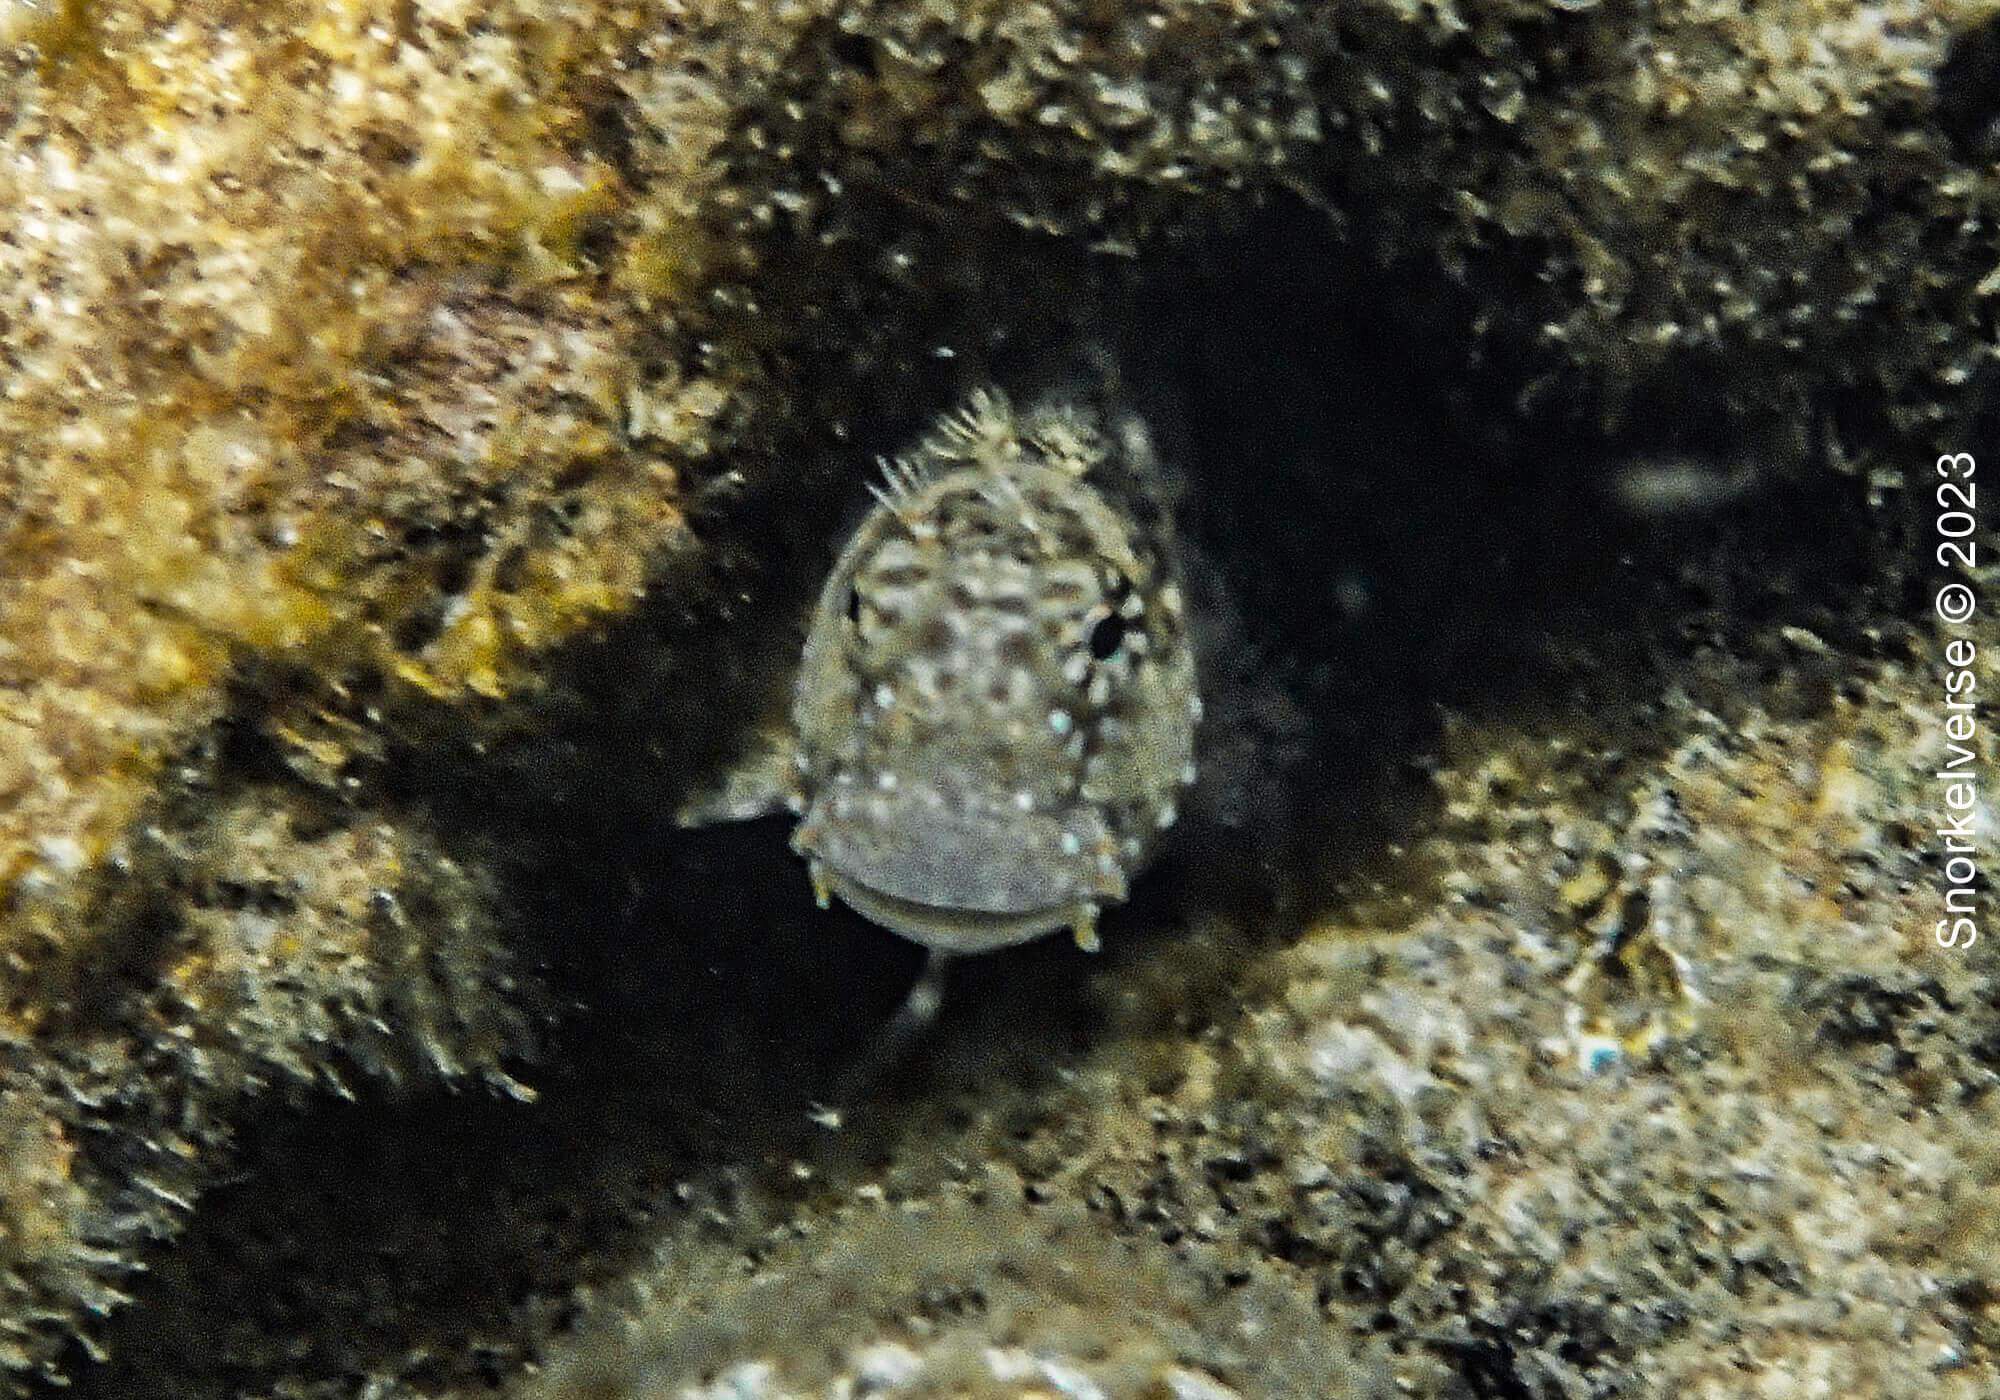 Jeweled Blenny Gobyfish